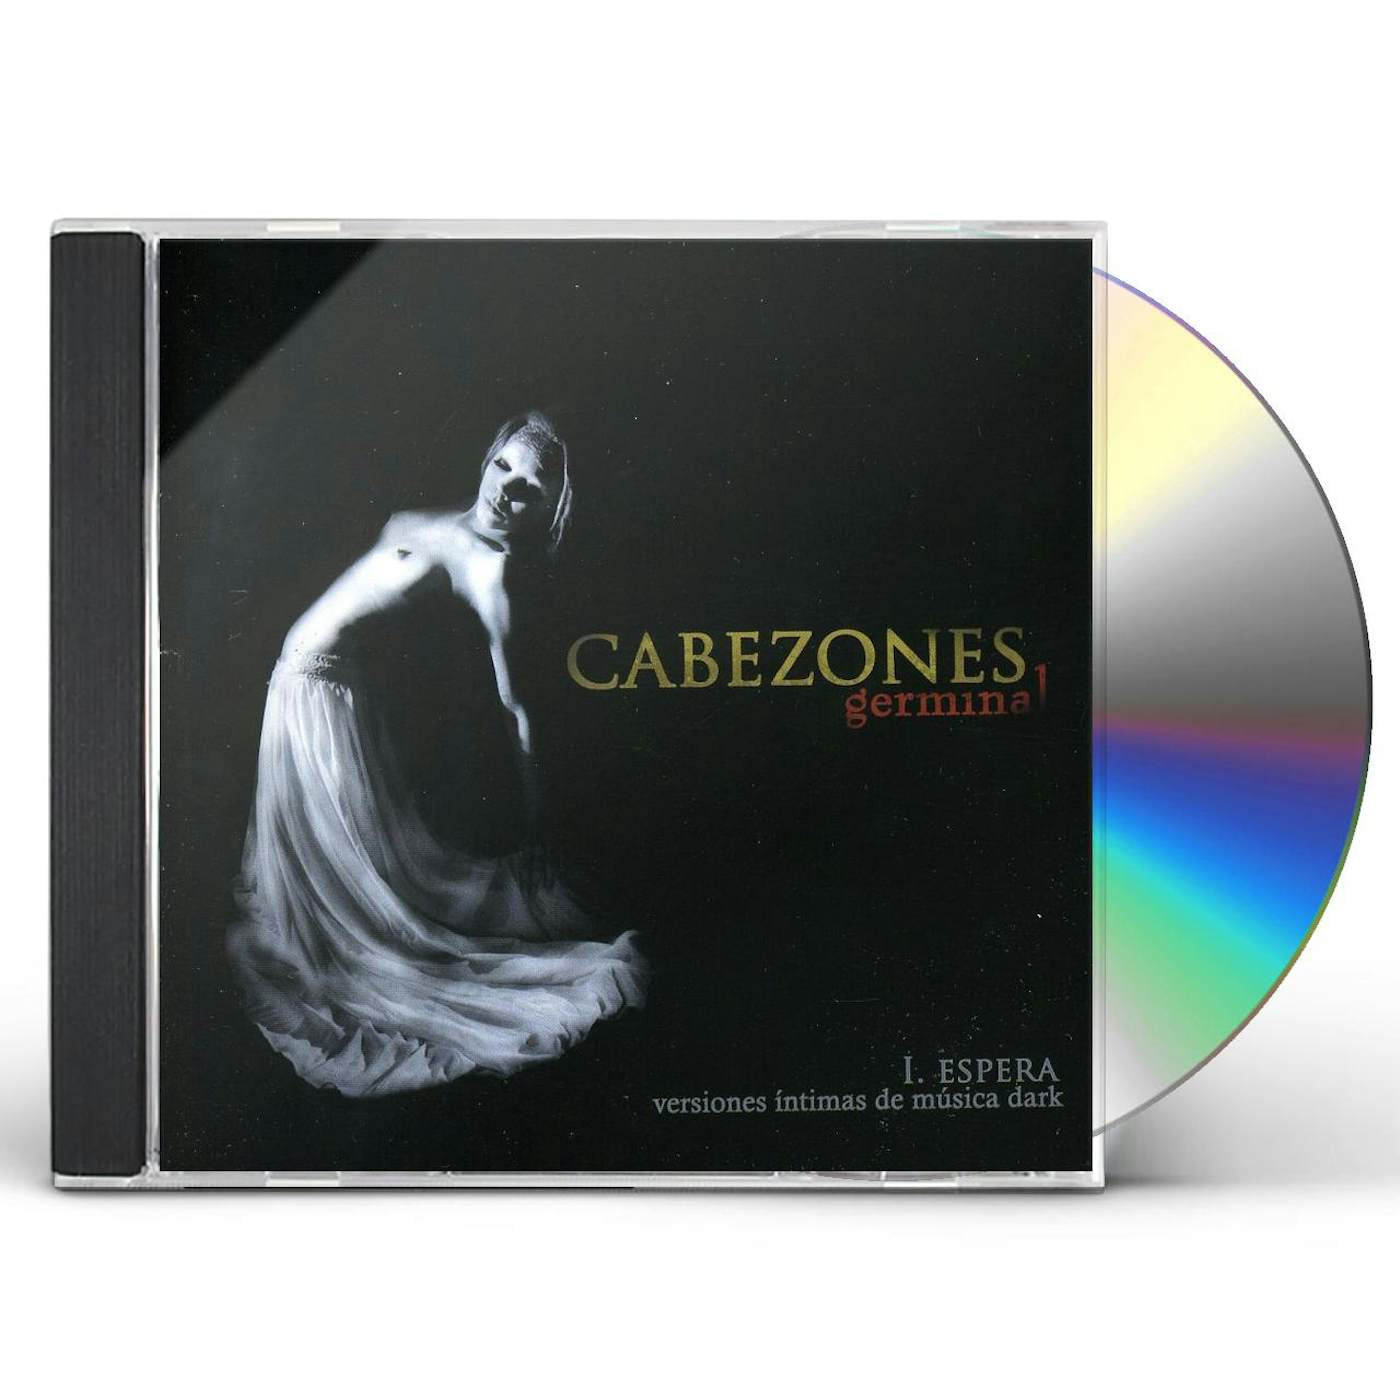 Cabezones GERMINAL CD